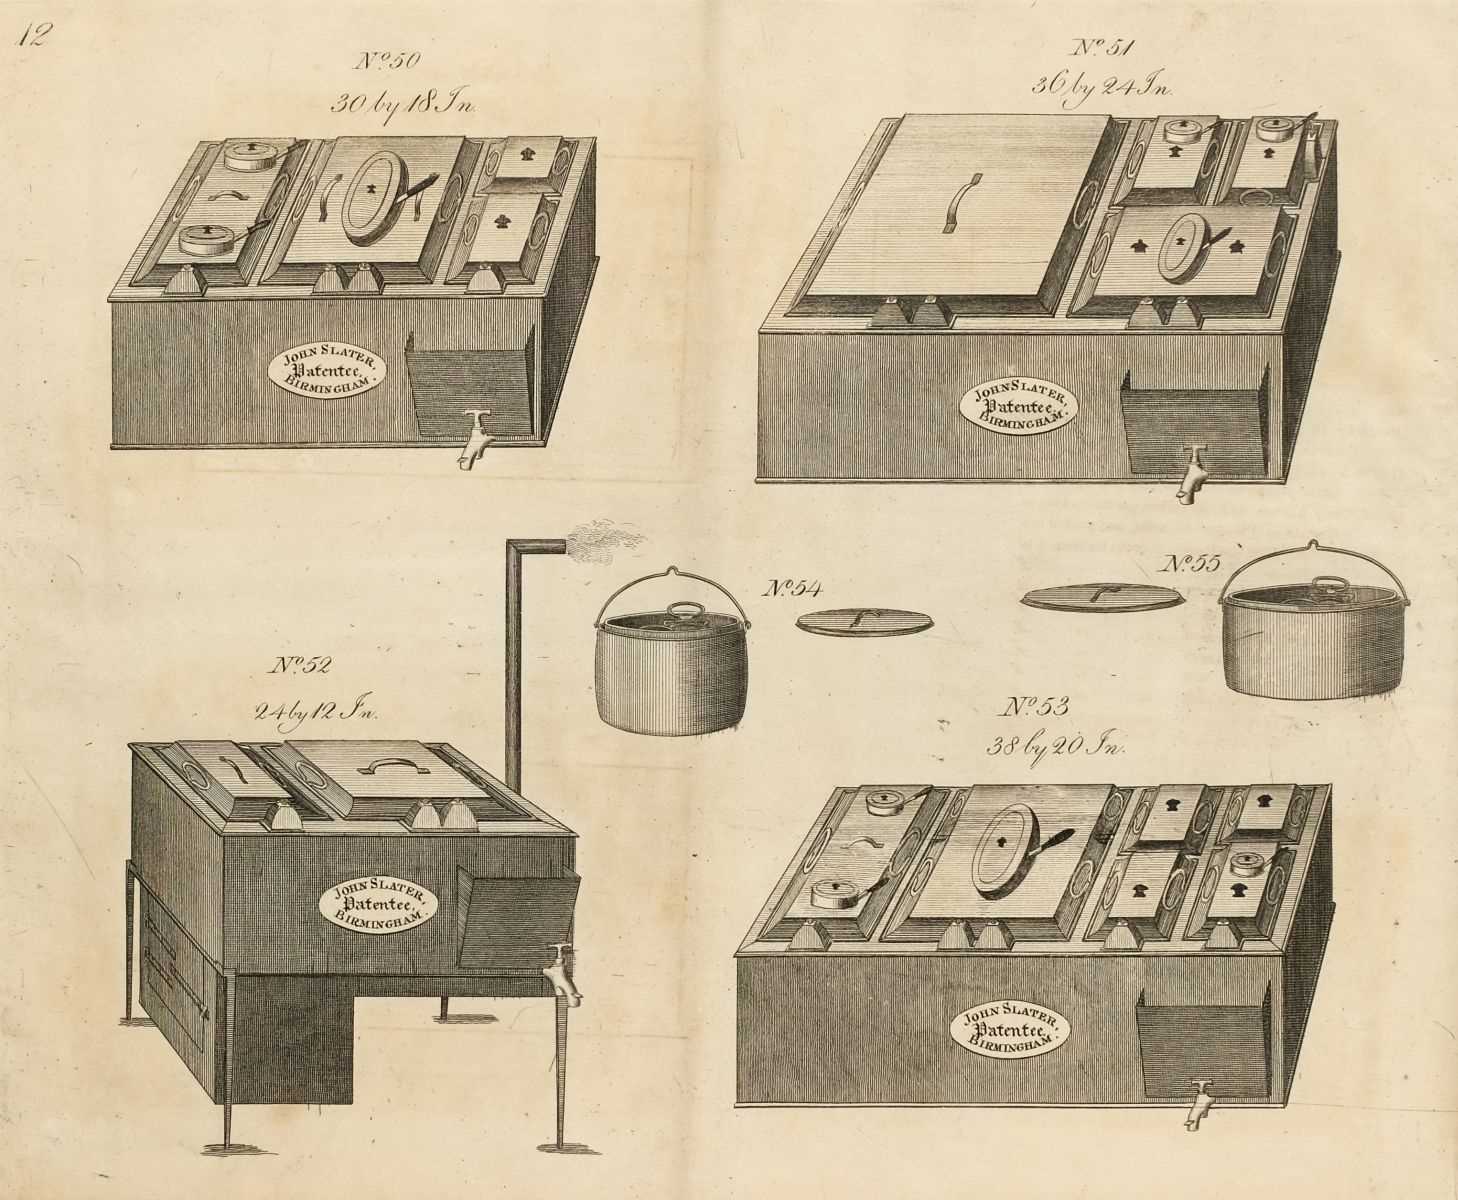 Lot 356 - Trade Catalogue. John Slater, Coach Spring & Patent Steam Kitchen Manufacturer, circa 1819